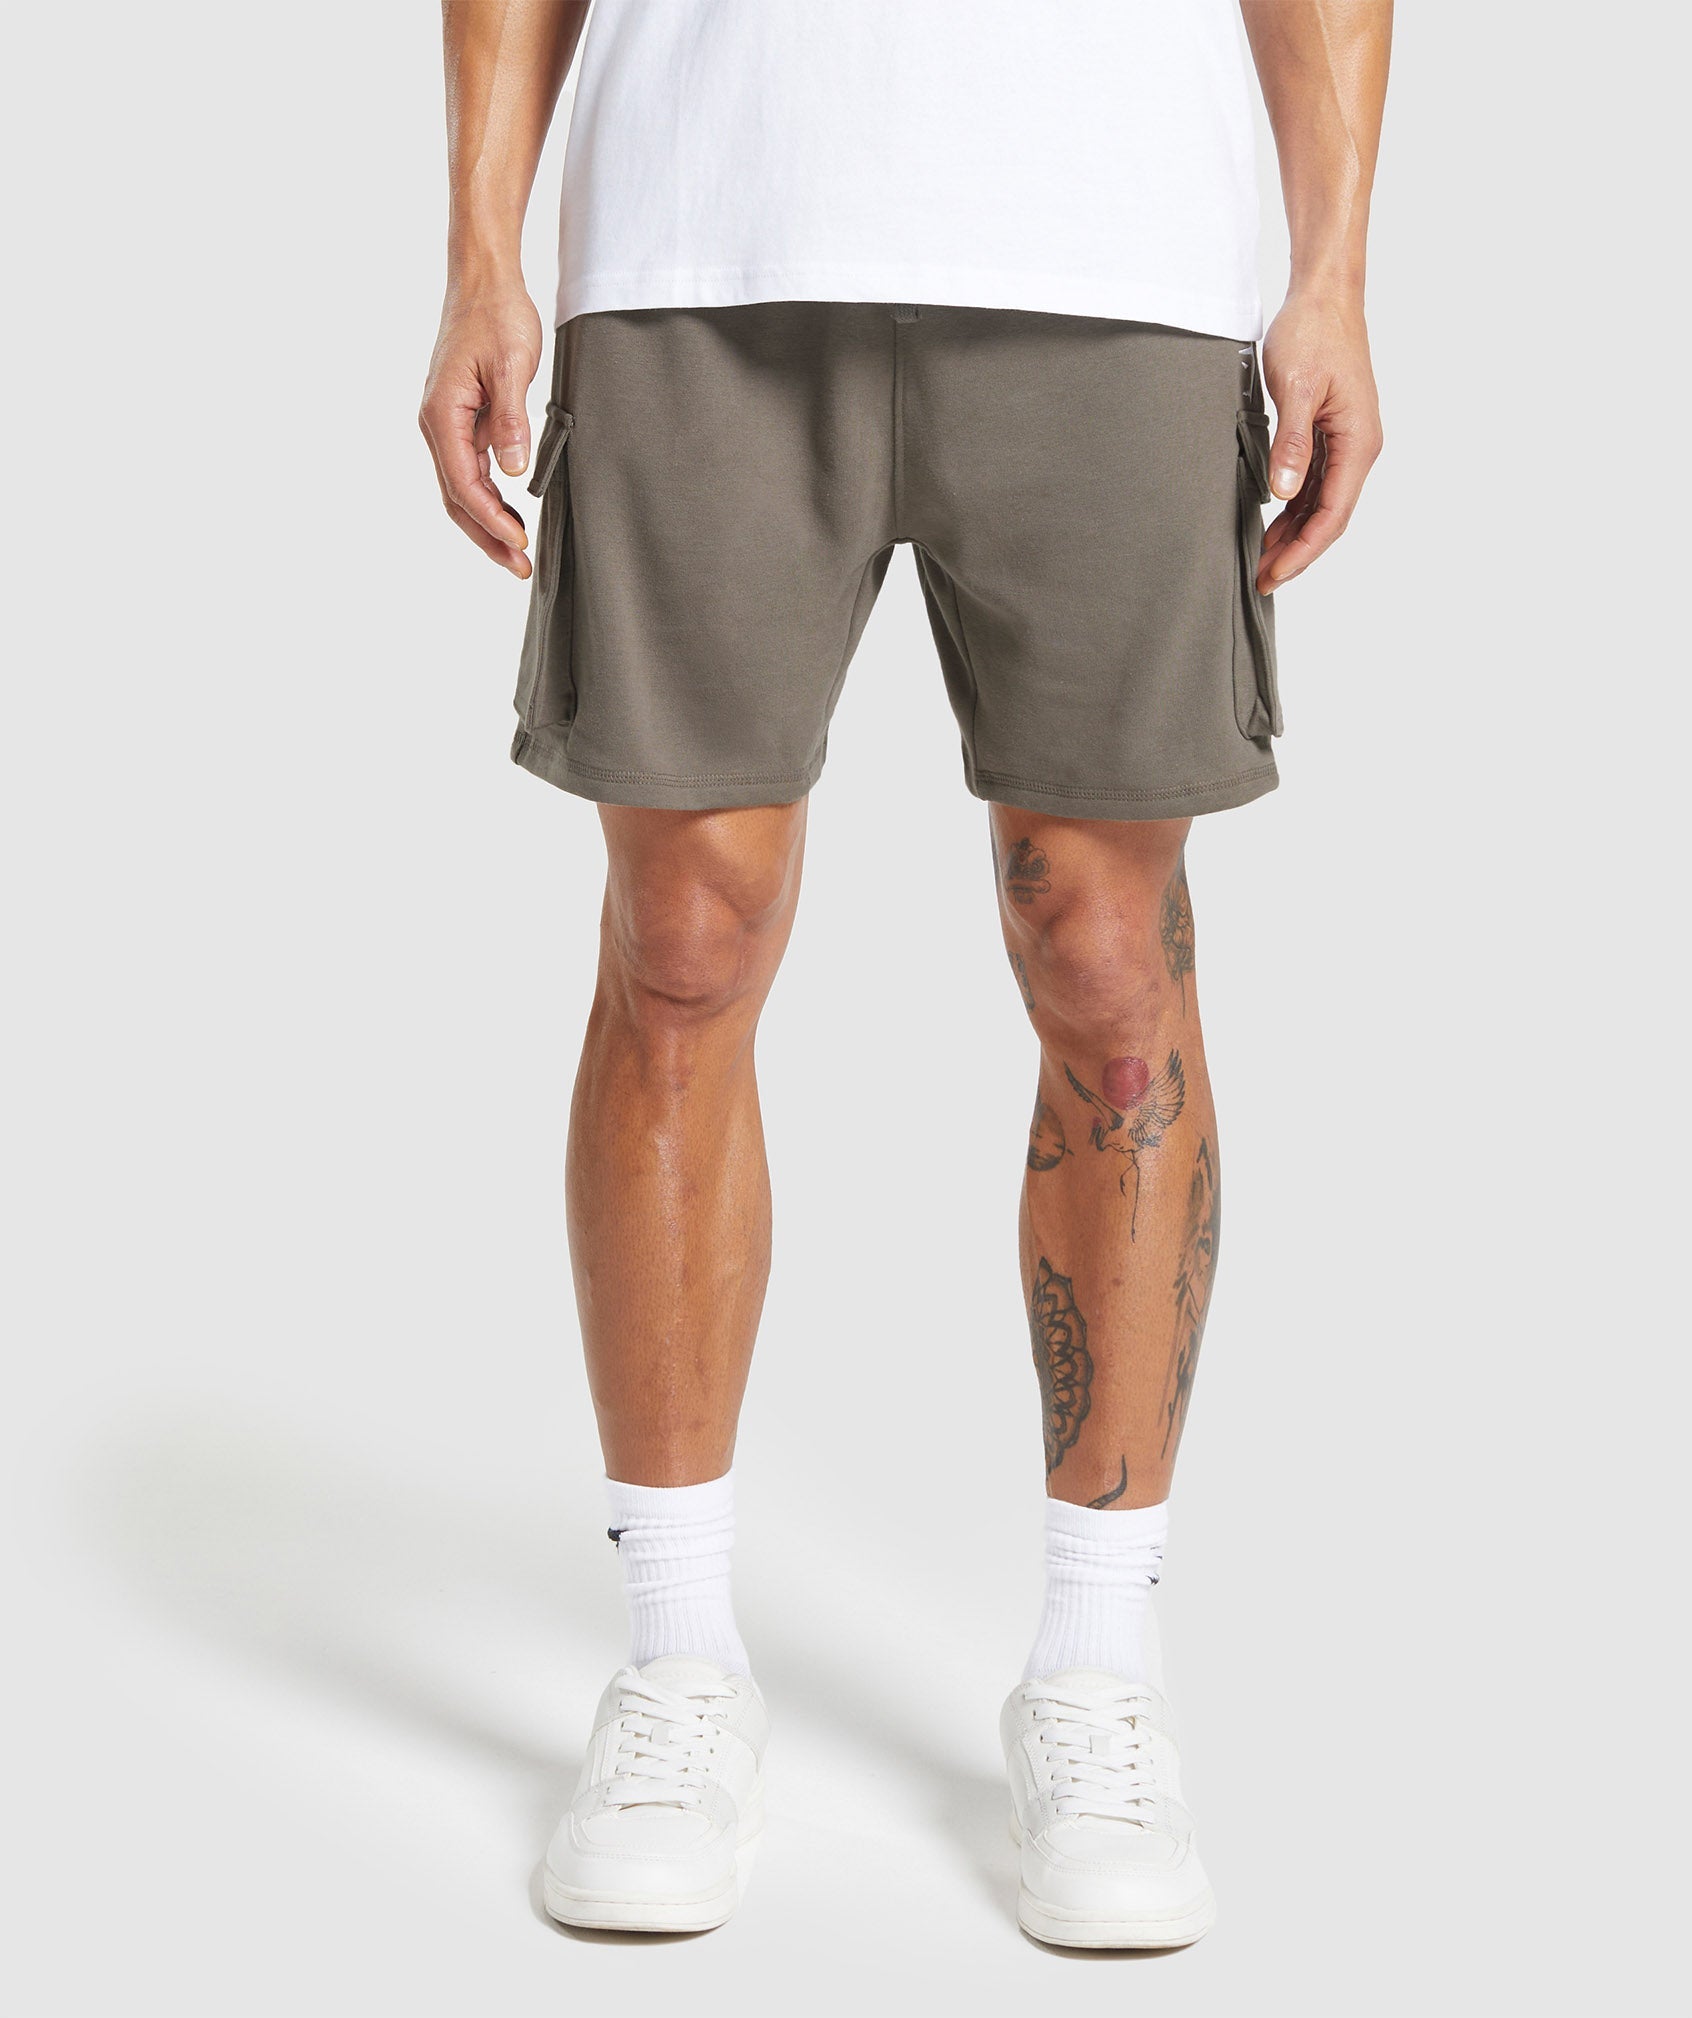 Gymshark Crest Cargo Shorts - Camo Brown